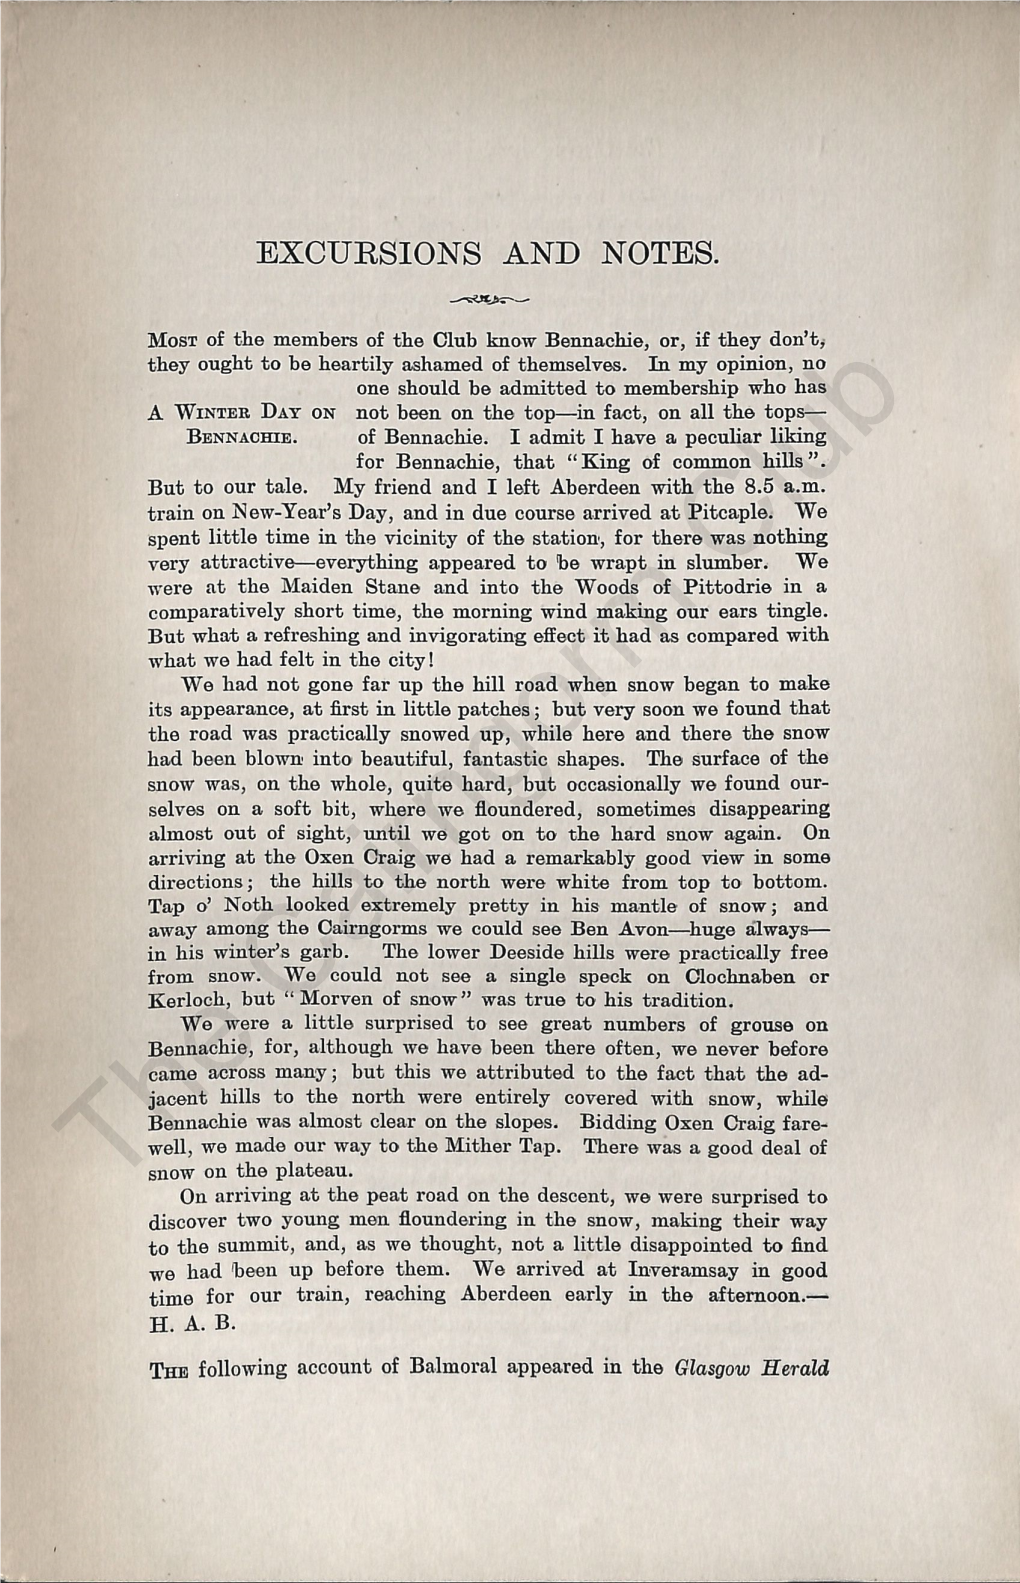 The Cairngorm Club Journal 020, 1903